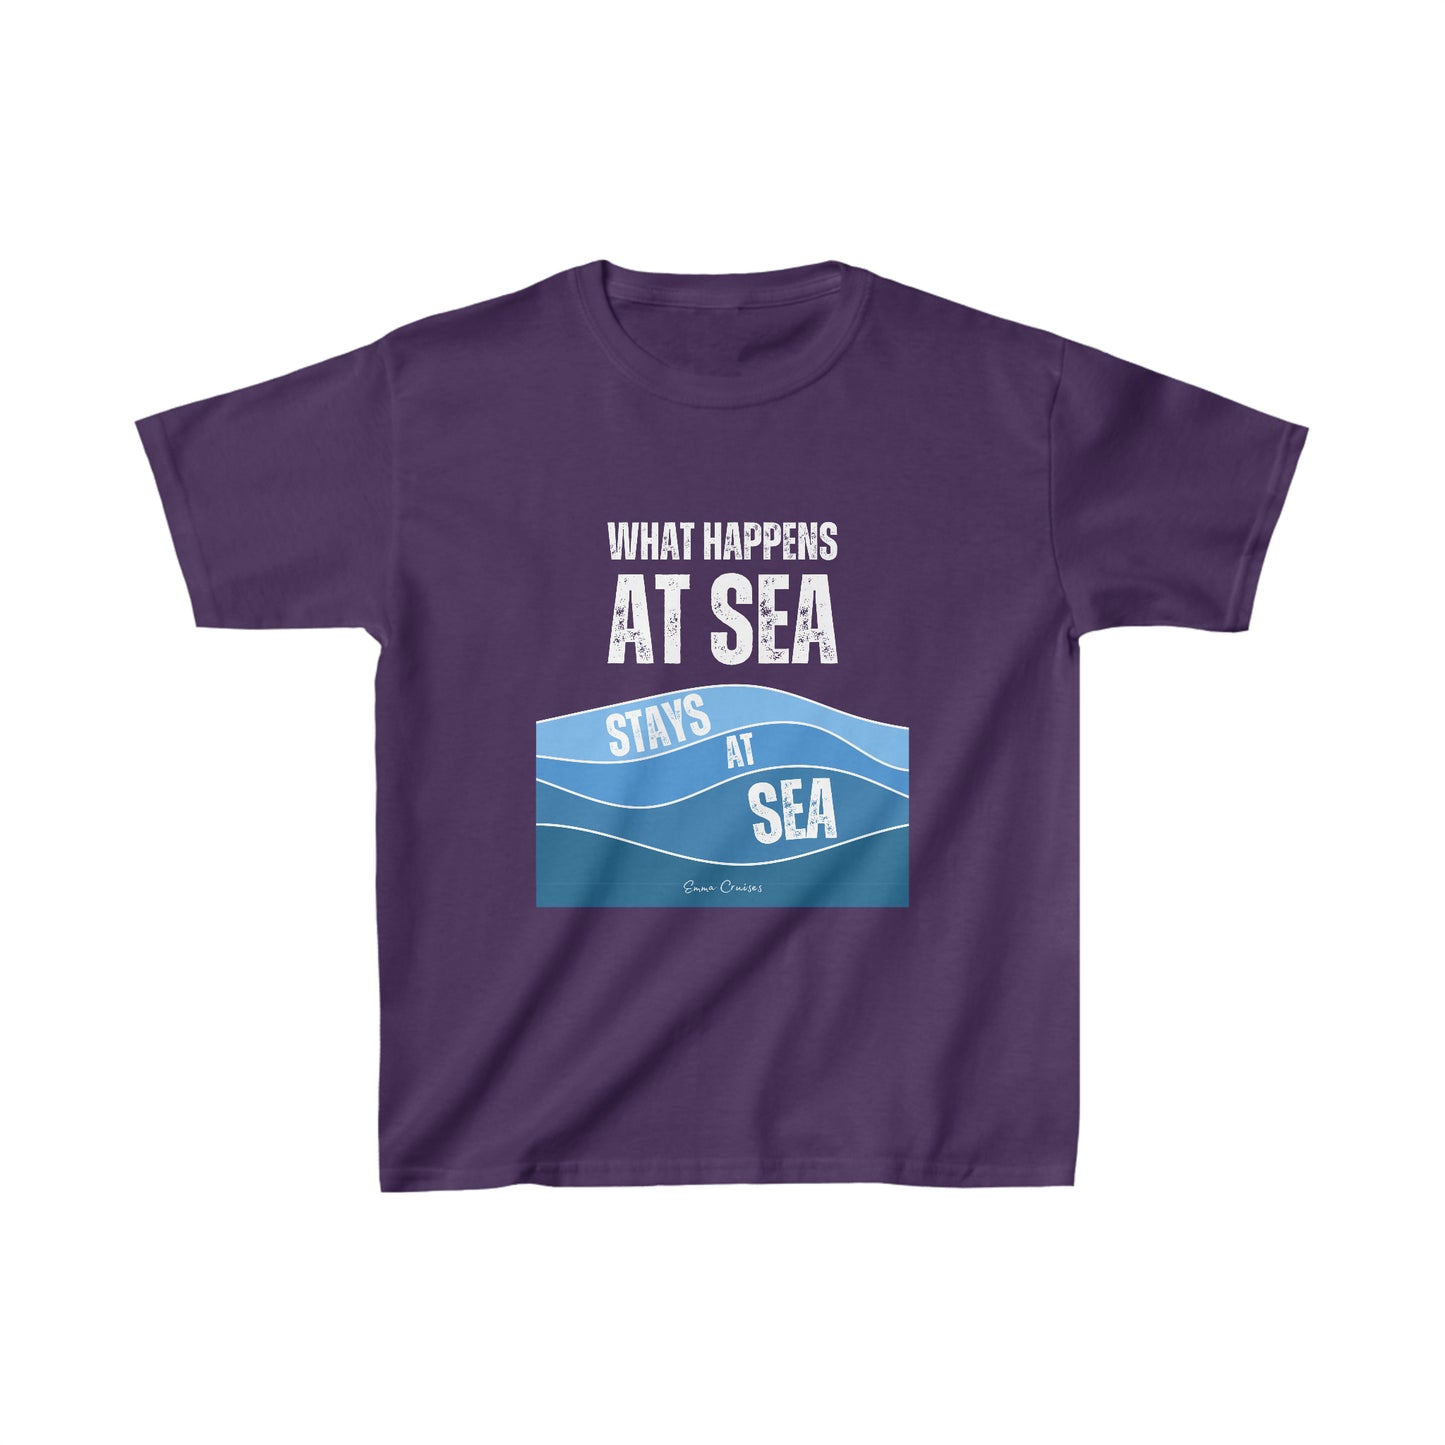 What Happens at Sea - Kids UNISEX T-Shirt